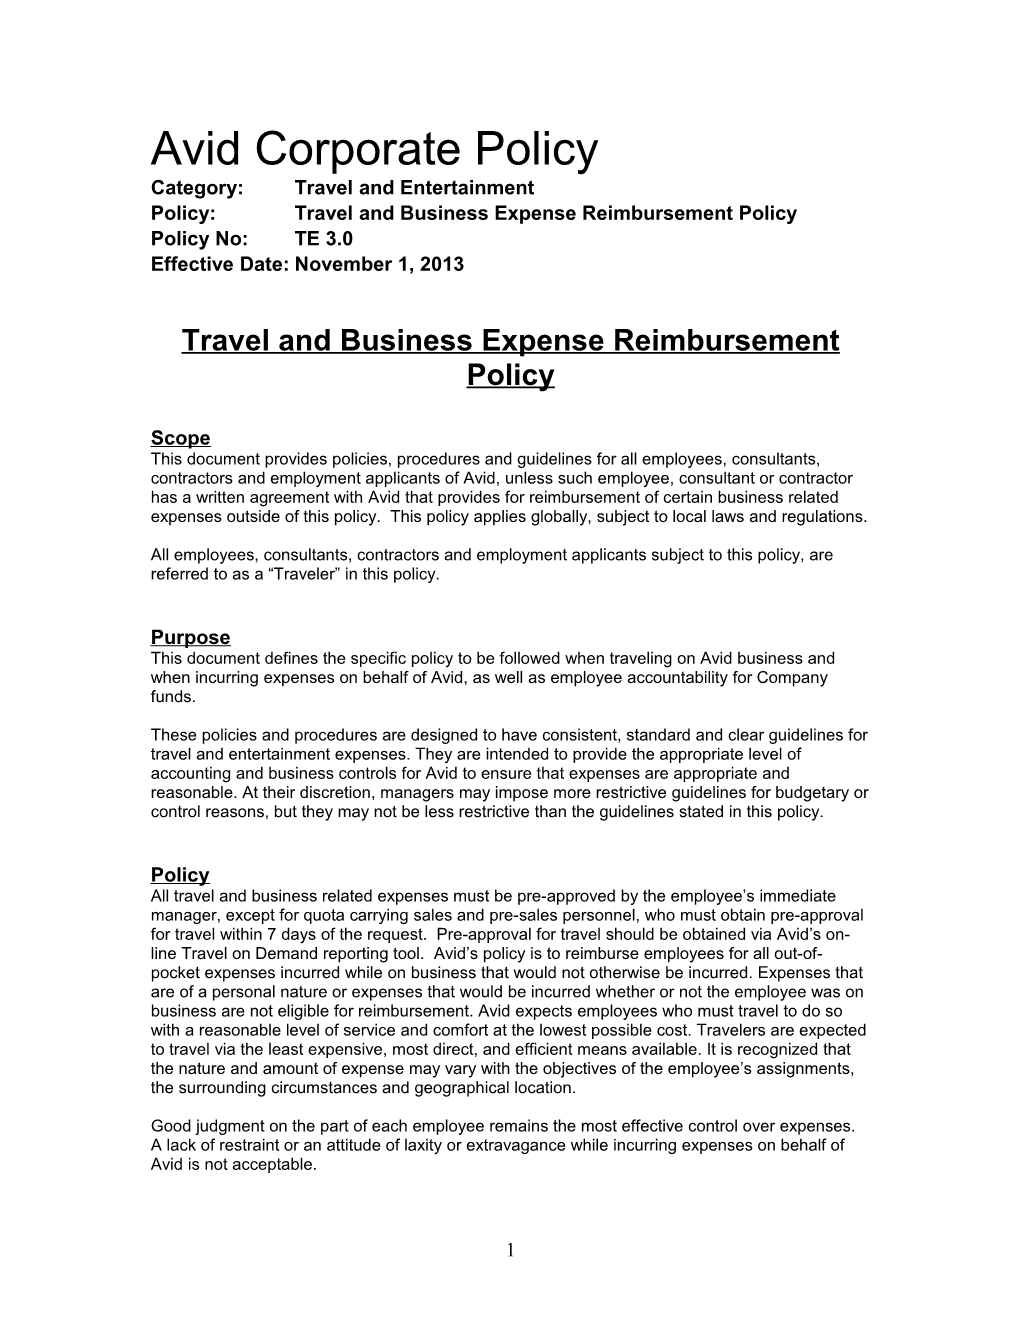 Travel and Business Expense Reimbursementpolicy